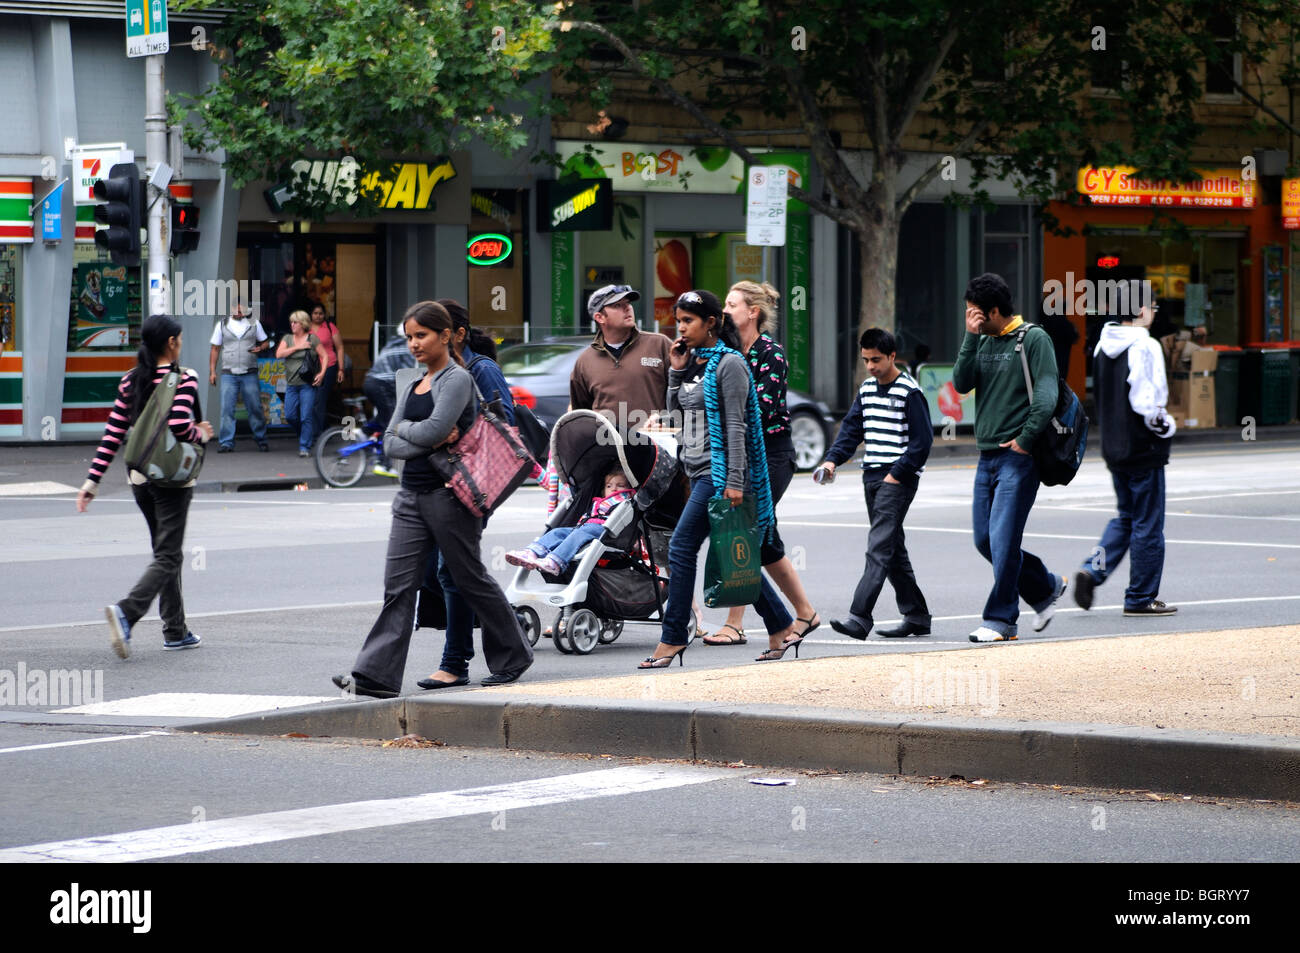 Australia, Melbourne city street people walking and shopping Stock Photo -  Alamy